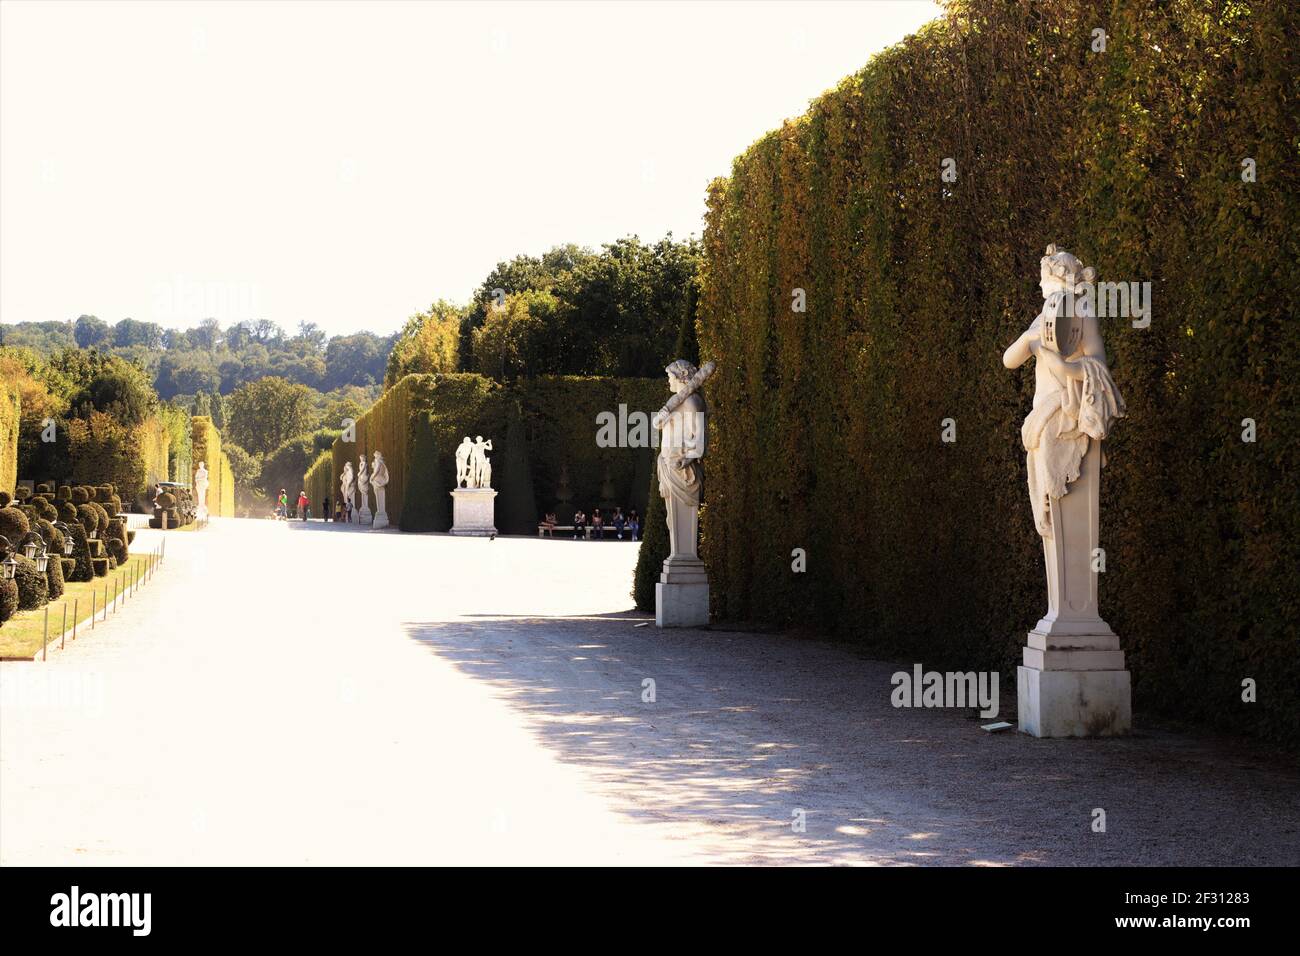 Promenade dans les jardins de Versailles, France Banque D'Images